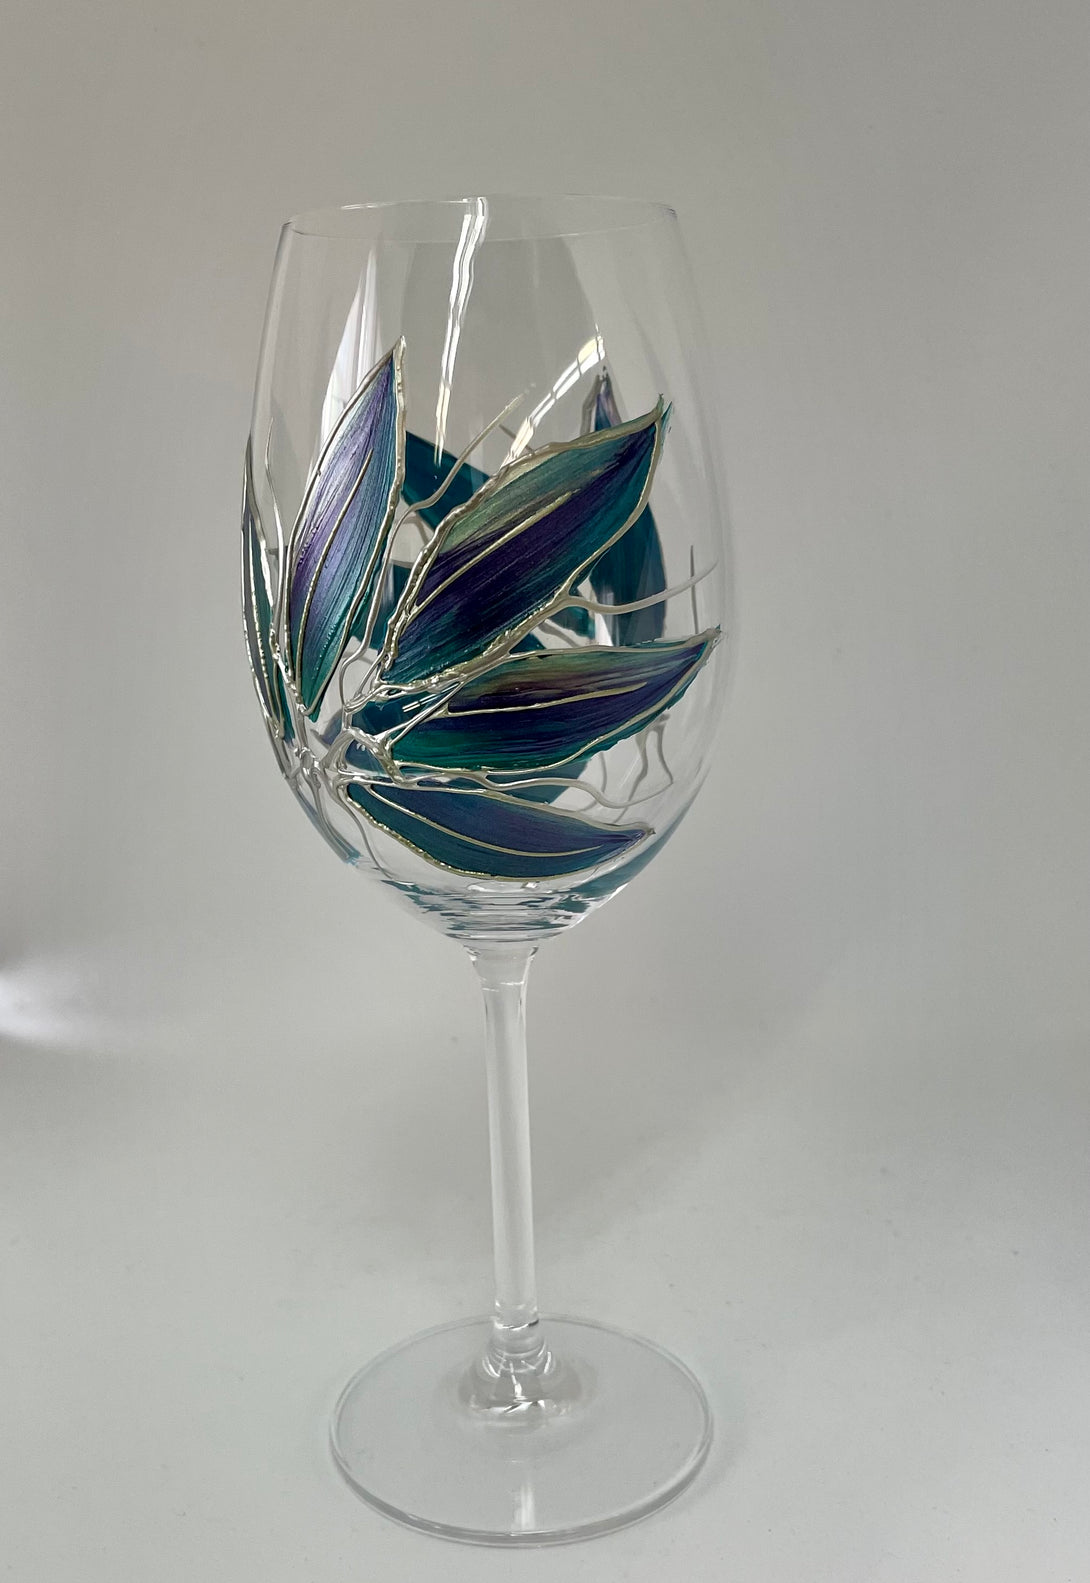 Lori Schiersmann - Wine Glass  - teal/purple/silver by Lori Schiersmann - McMillan Arts Centre - Vancouver Island Art Gallery